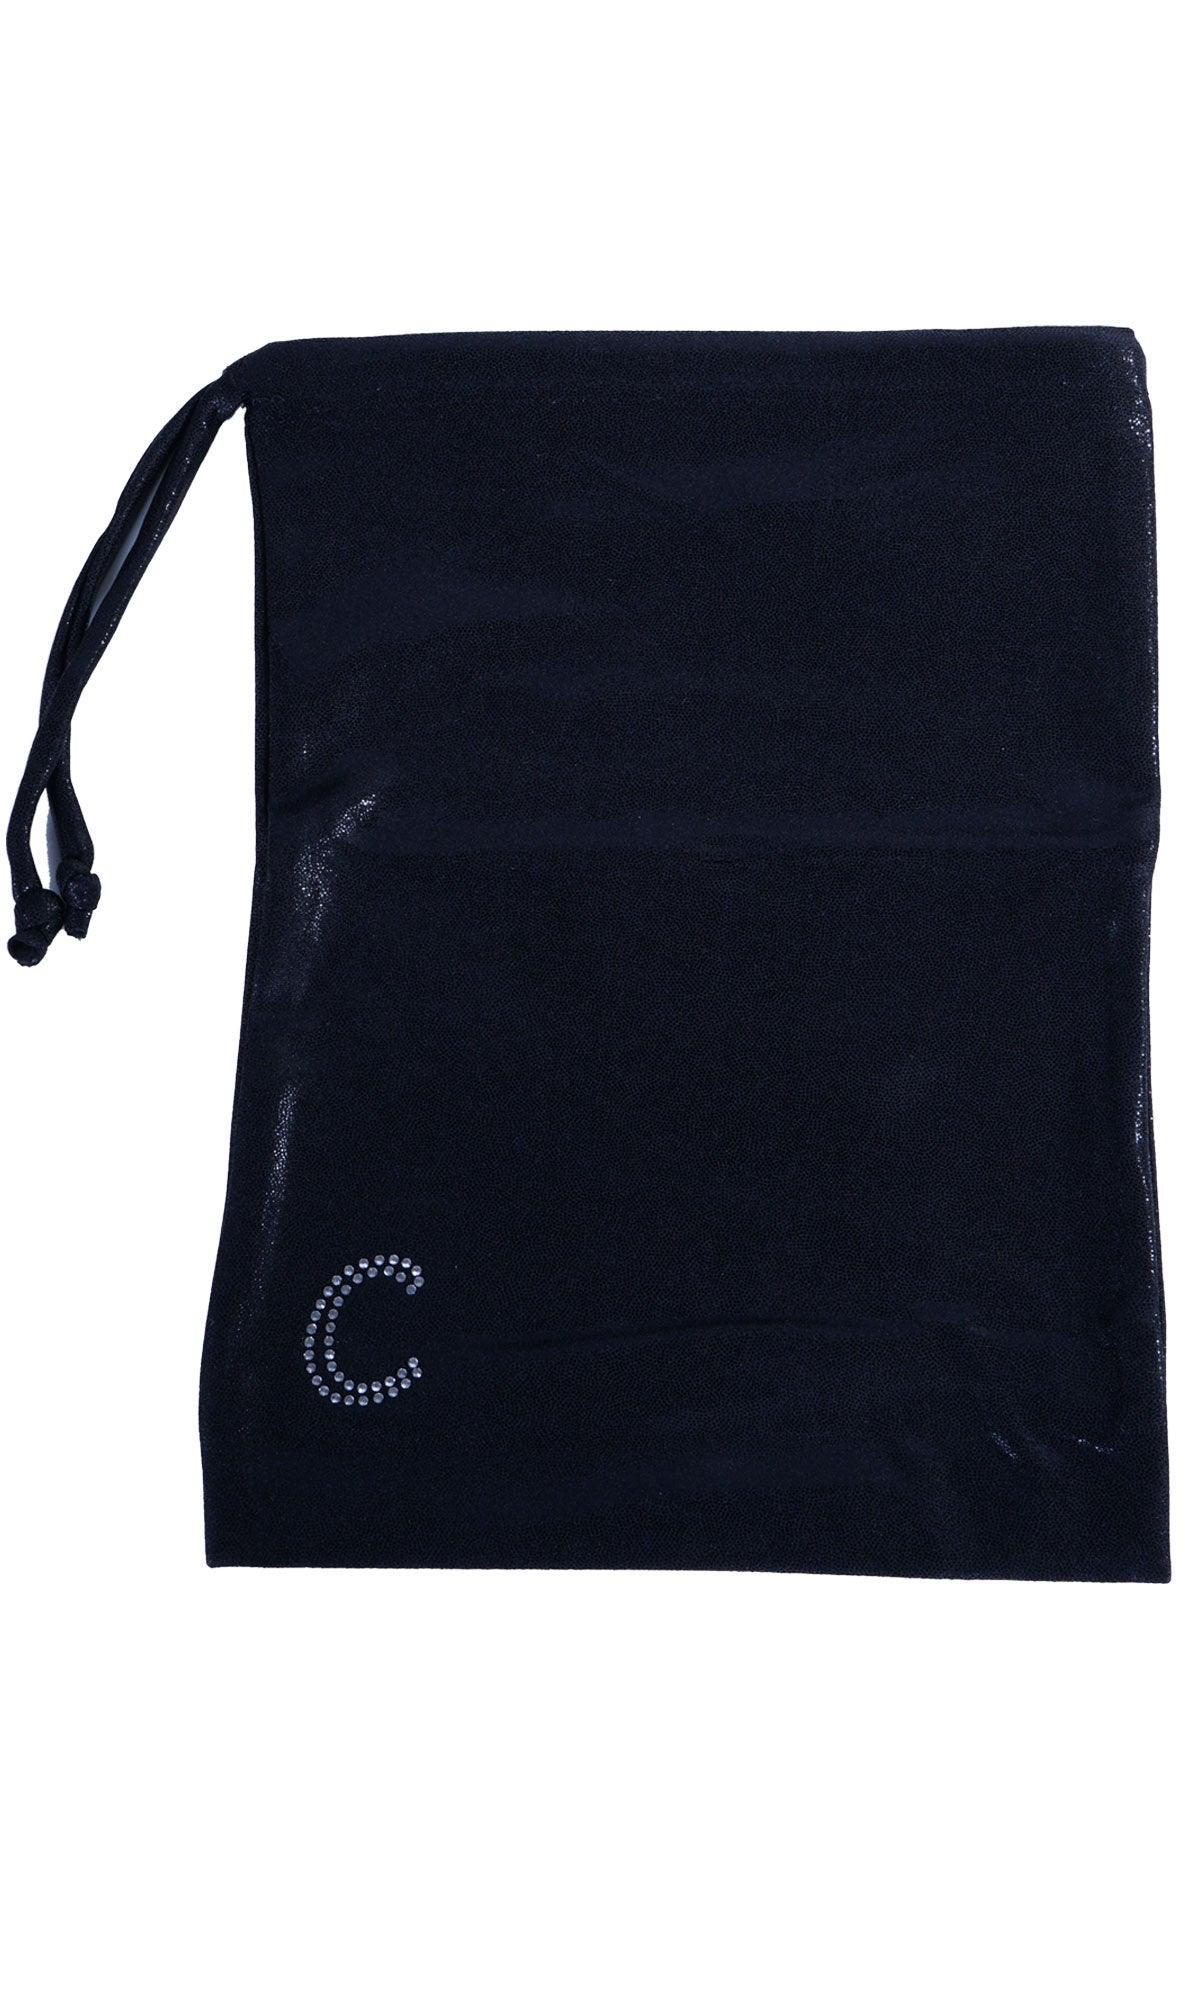 CEK Grip bag black